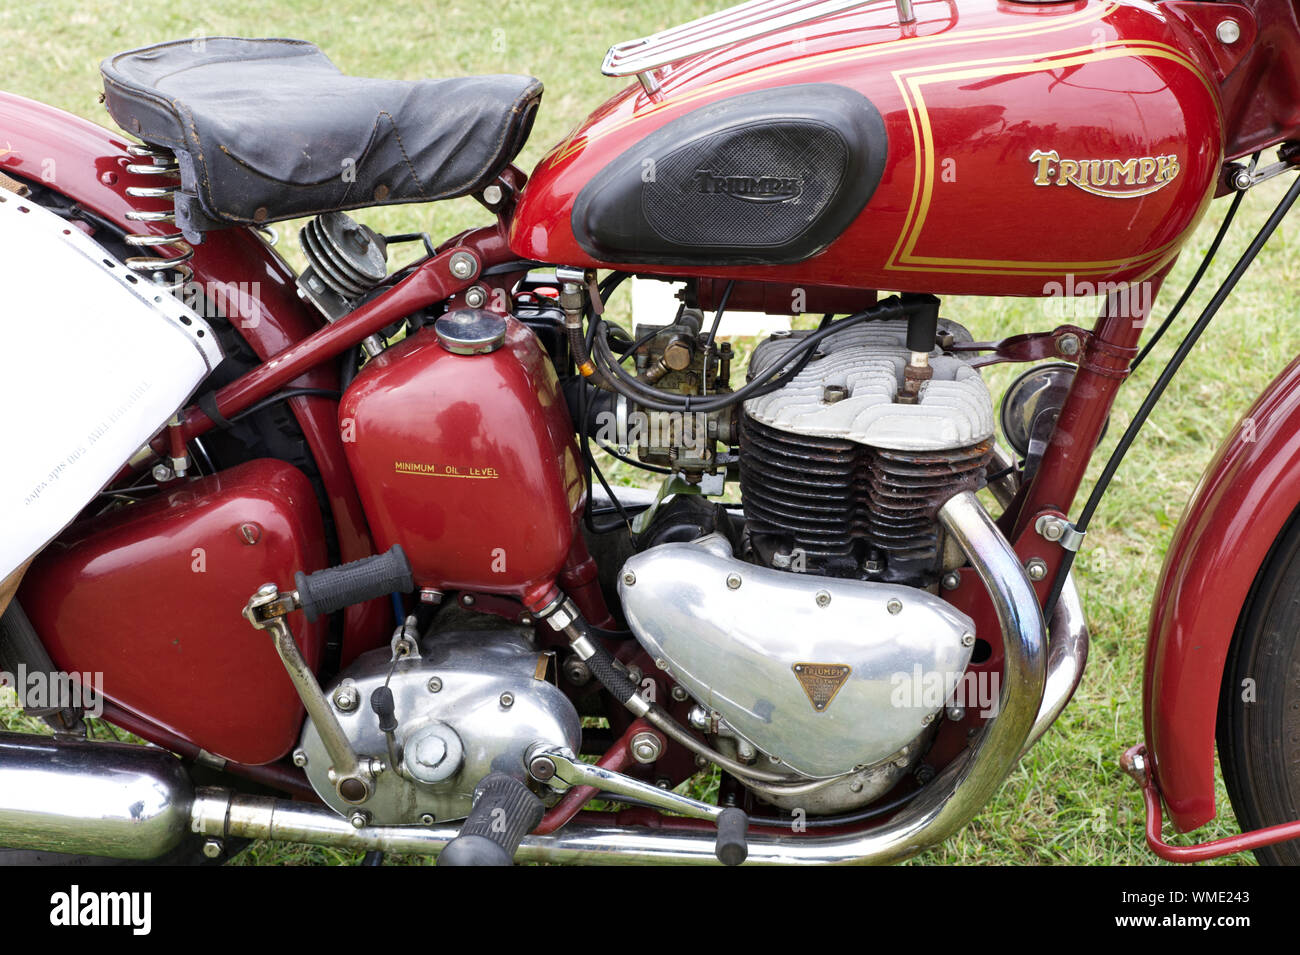 Moto Triumph vintage, TRW Triumph Photo Stock - Alamy